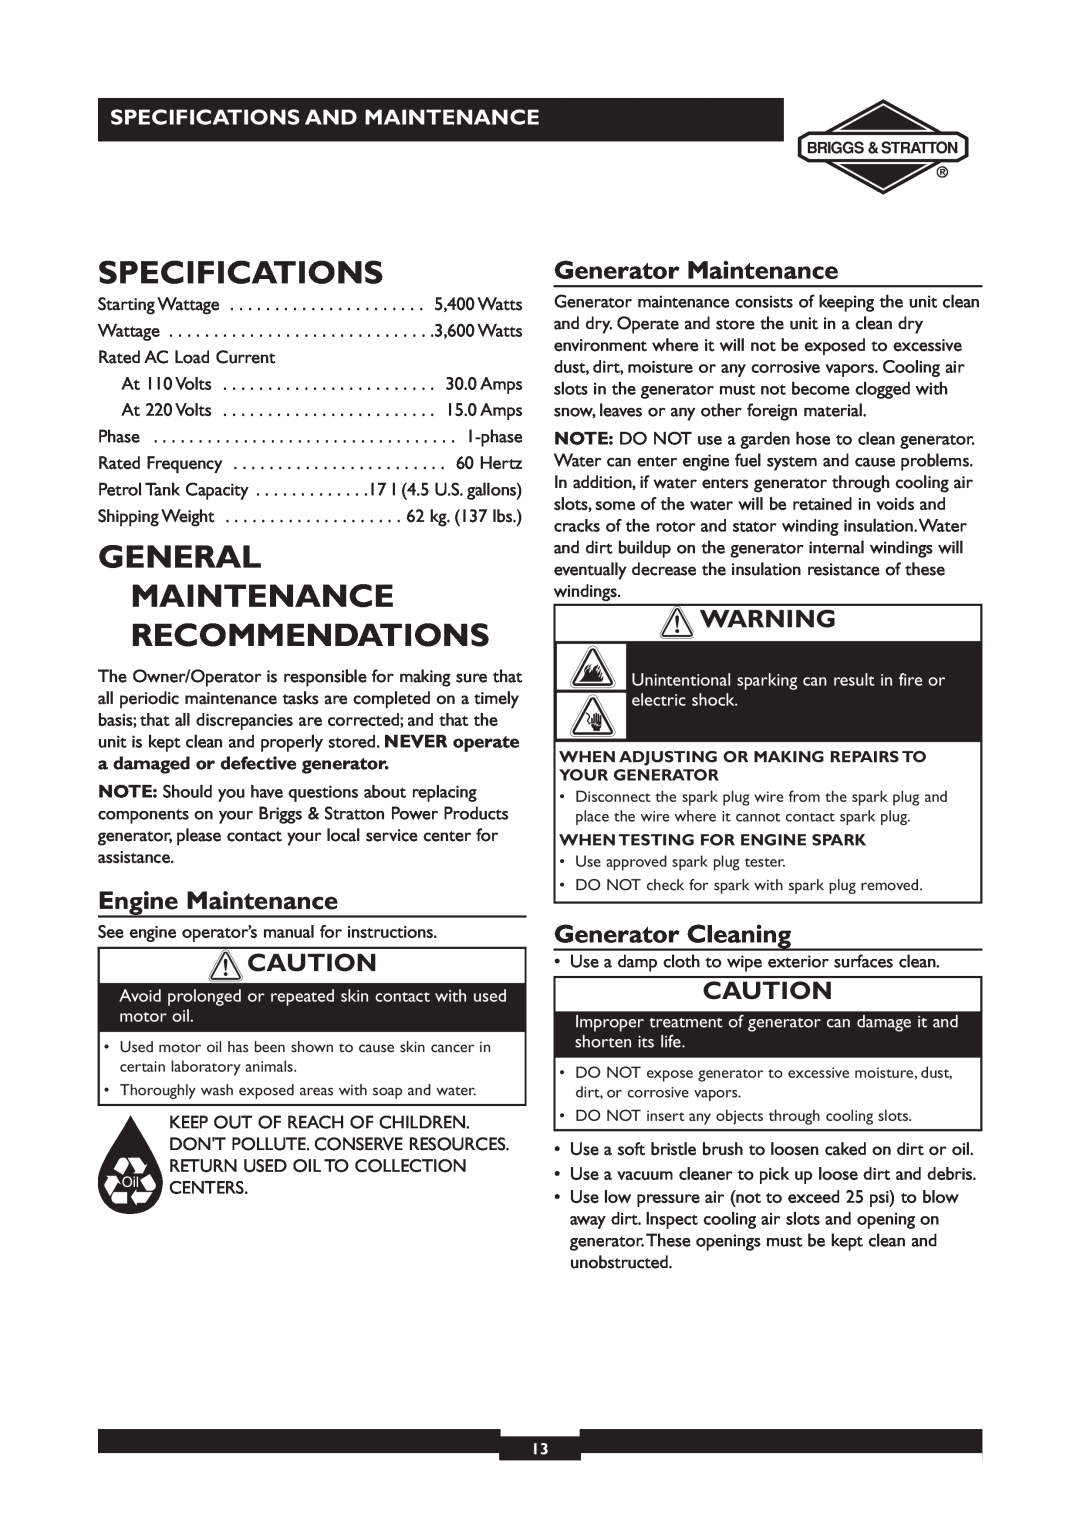 Briggs & Stratton 30231 Specifications, General Maintenance Recommendations, Engine Maintenance, Generator Maintenance 